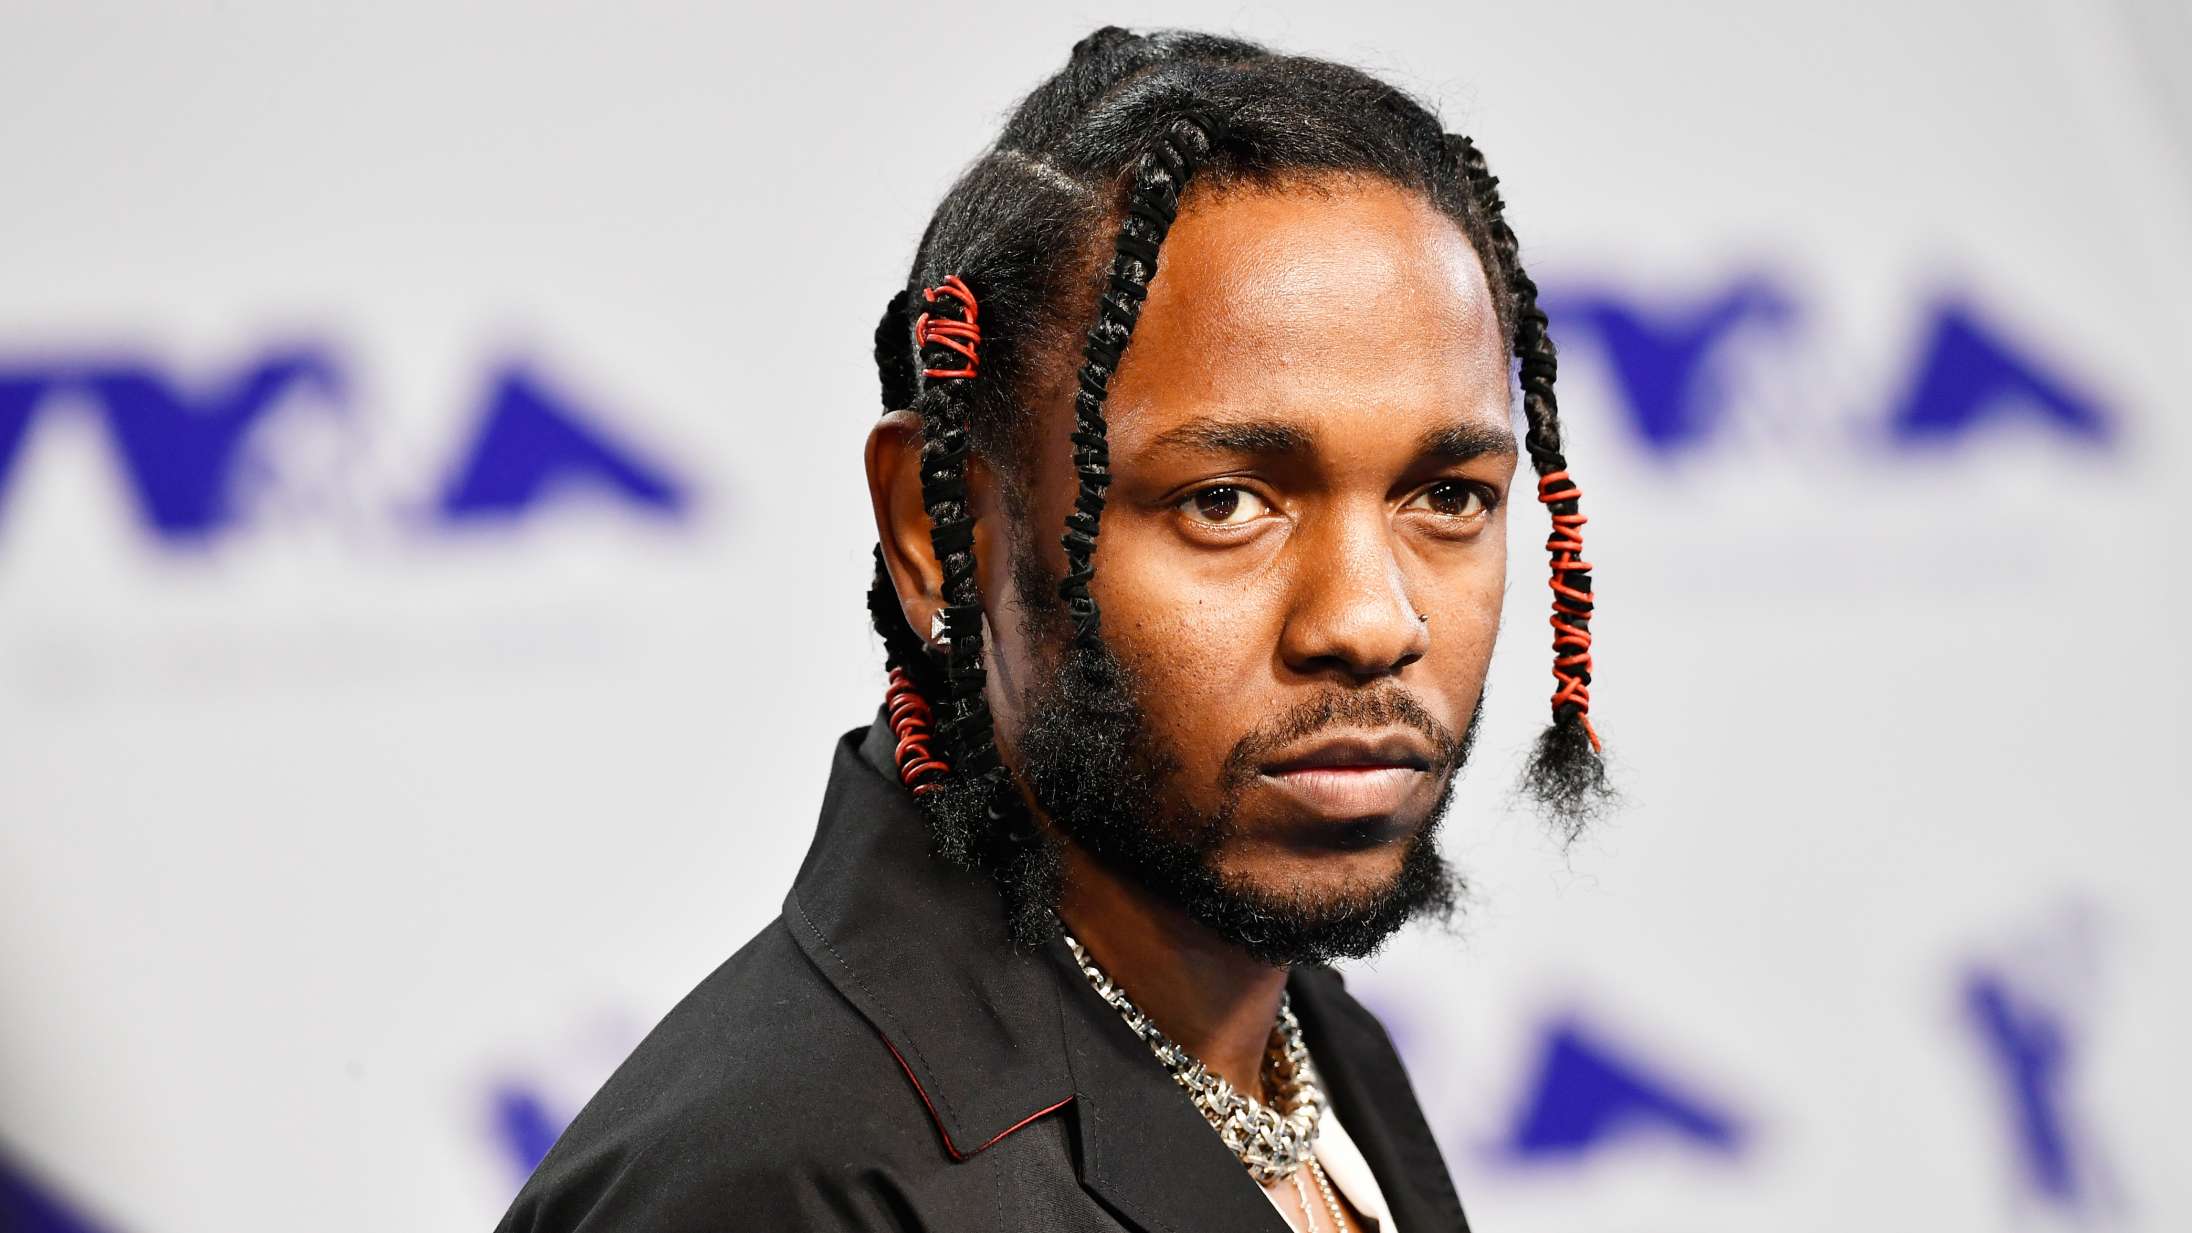 Kendrick Lamar dissekerer sit mesterværk ‘To Pimp a Butterfly’ i ny podcastserie